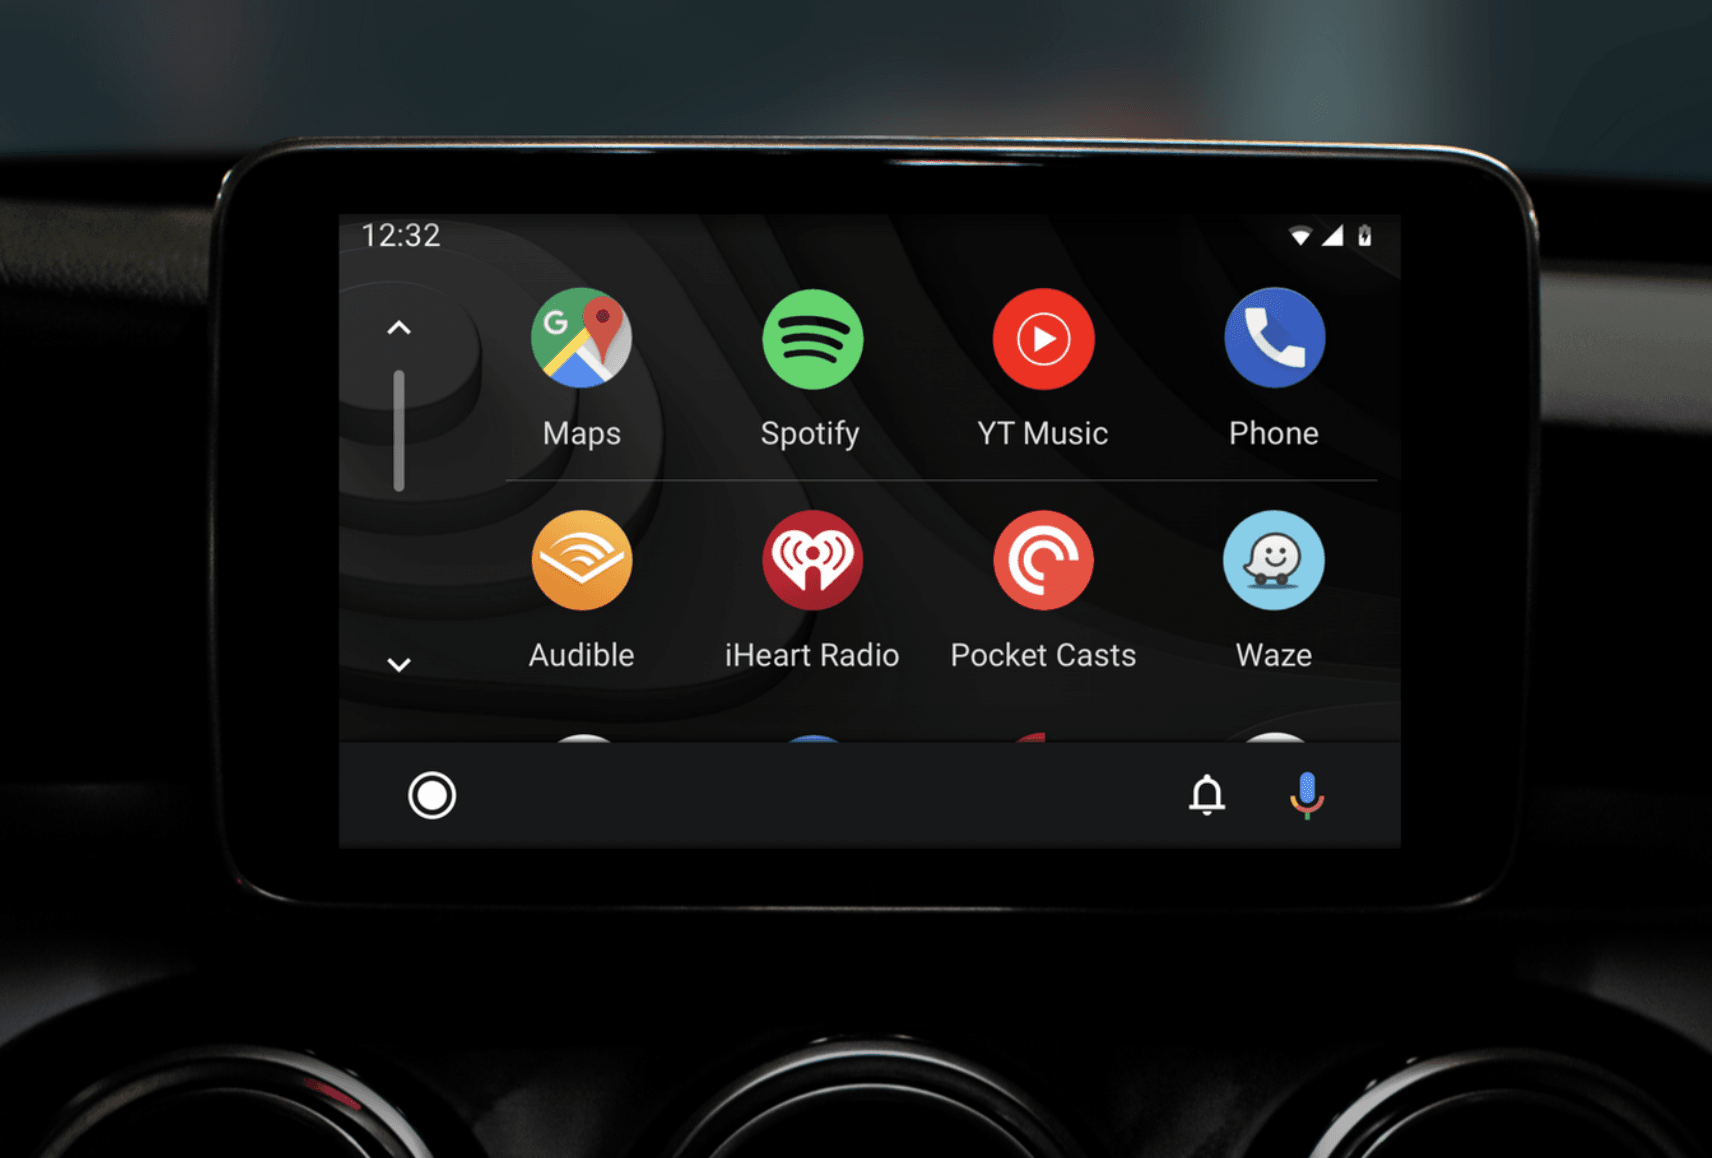 Android Auto pobrany 100 mln razy z Google Play. Nie w